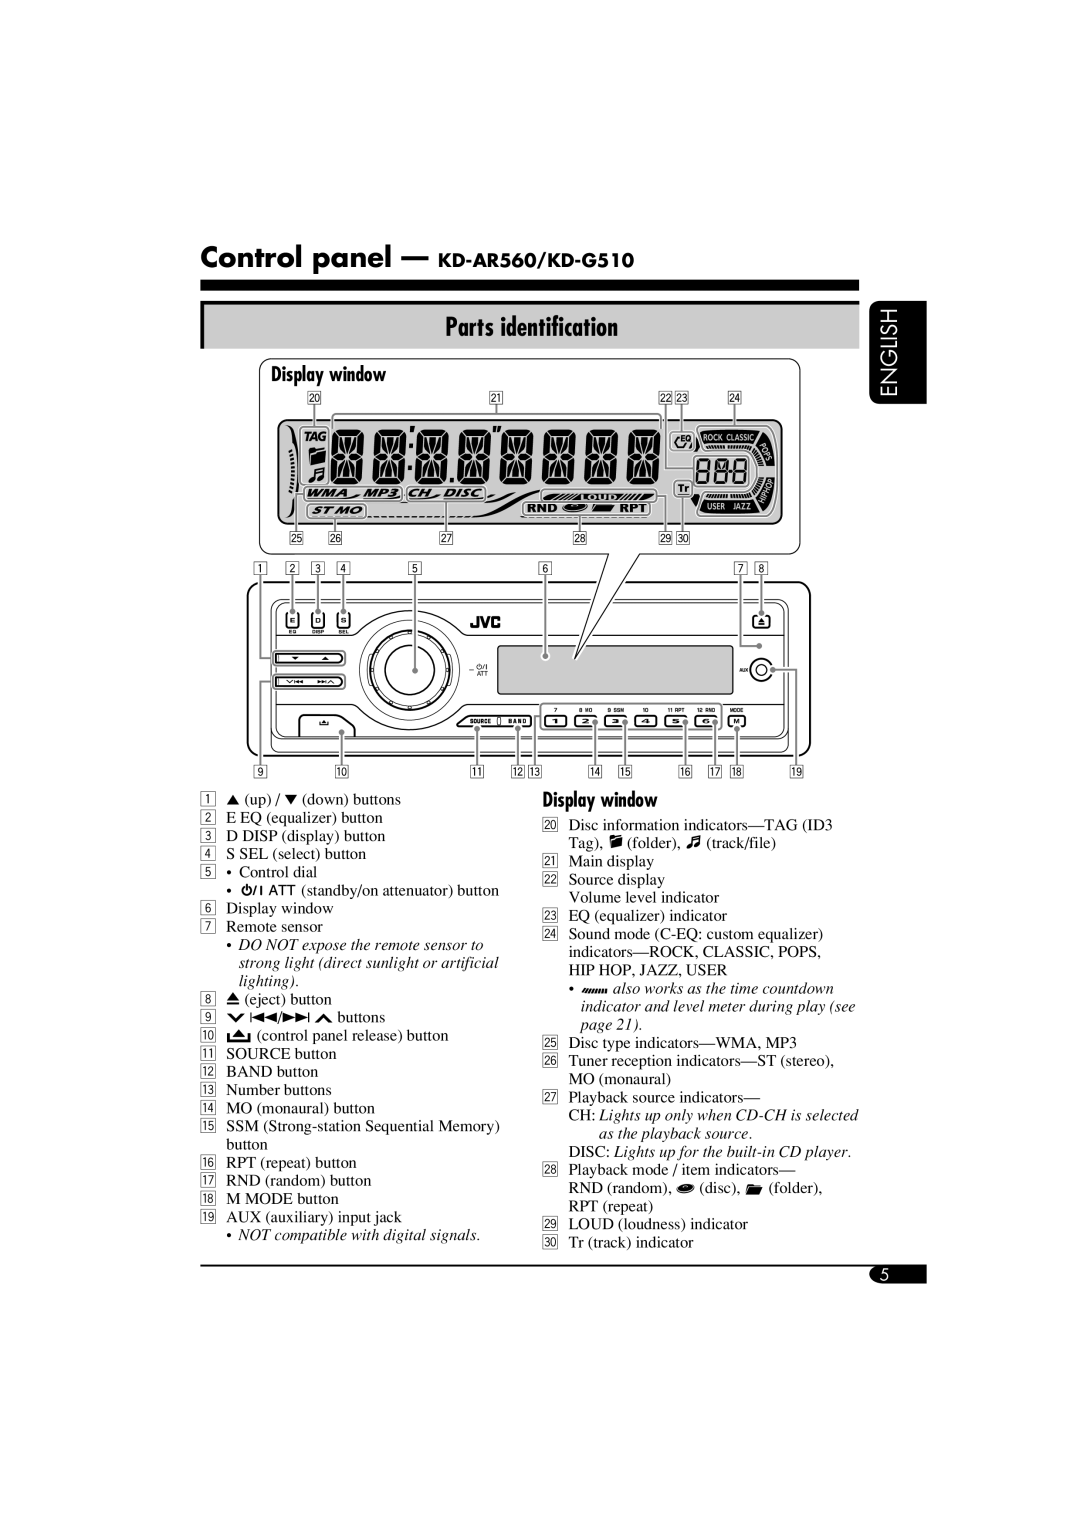 JVC manual Control panel - KD-AR560/KD-G510, Parts identification, Display window, English 